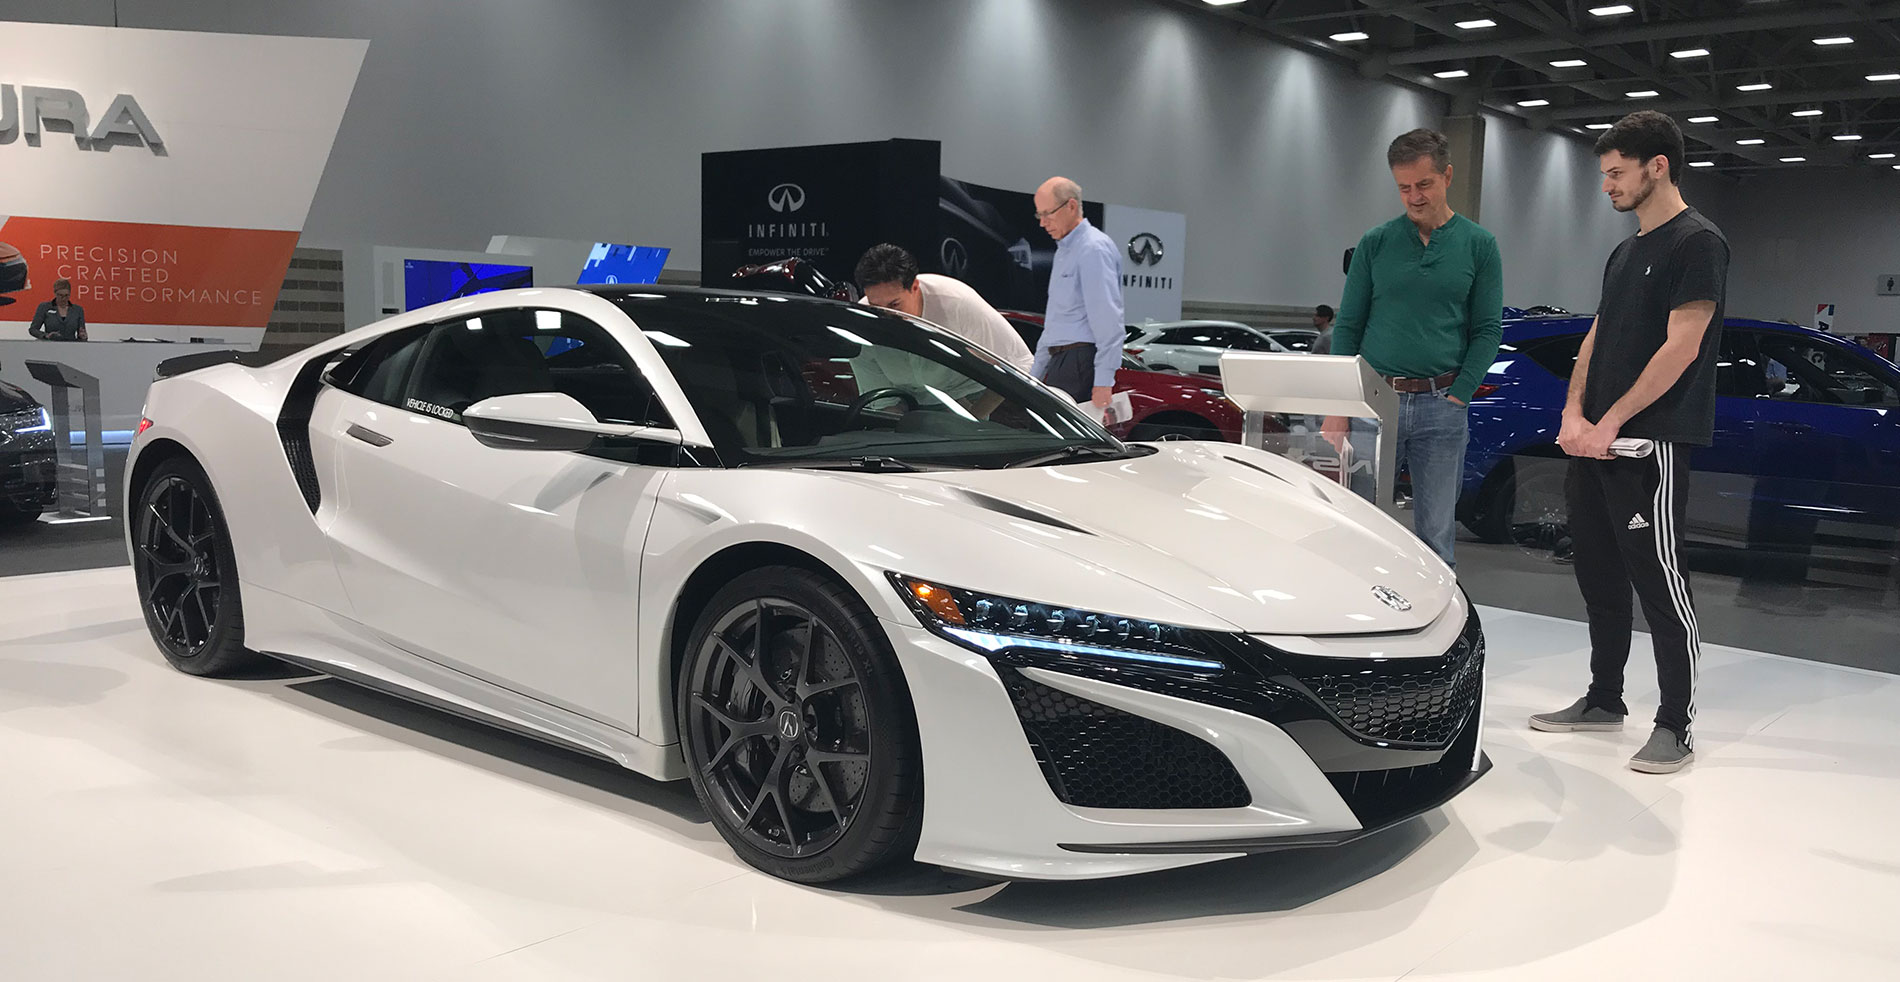 North Texas Auto Show, new concept car at auton show